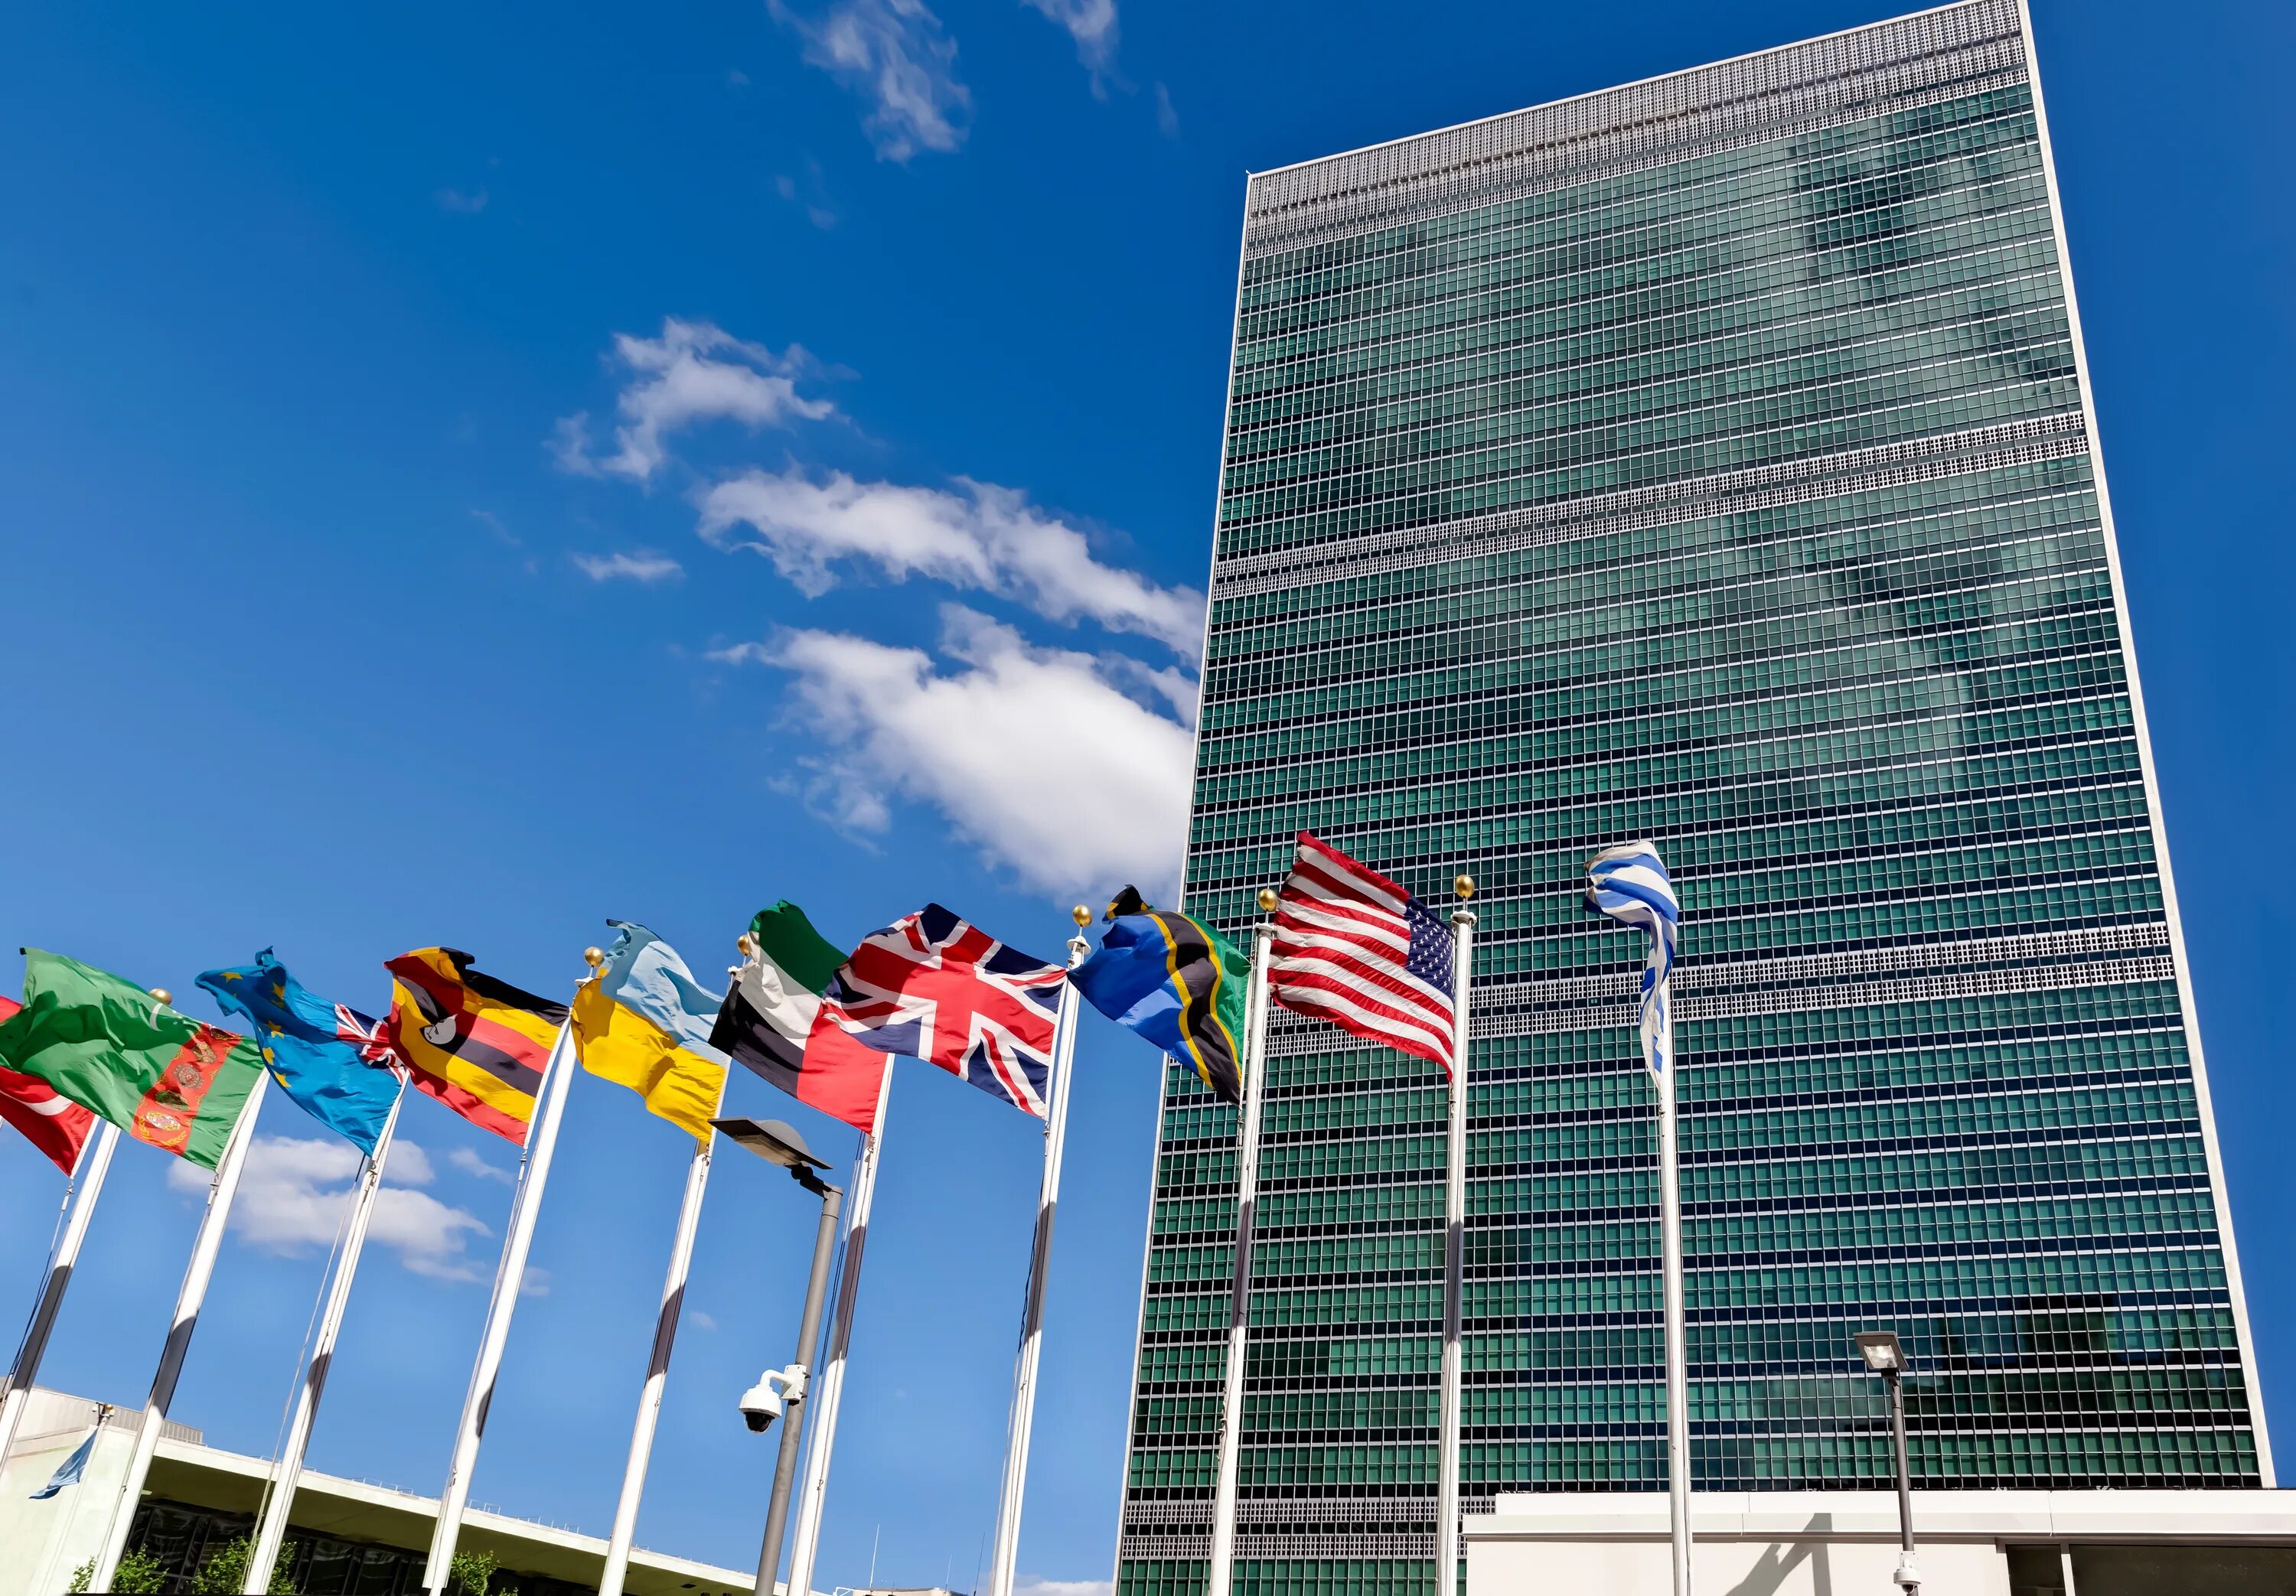 Штаб-квартира ООН В Нью-Йорке. Здание штаб-квартиры ООН В Нью-Йорке. Центральные учреждения ООН В Нью-Йорке. Секретариат ООН здание. Организации оон в сша